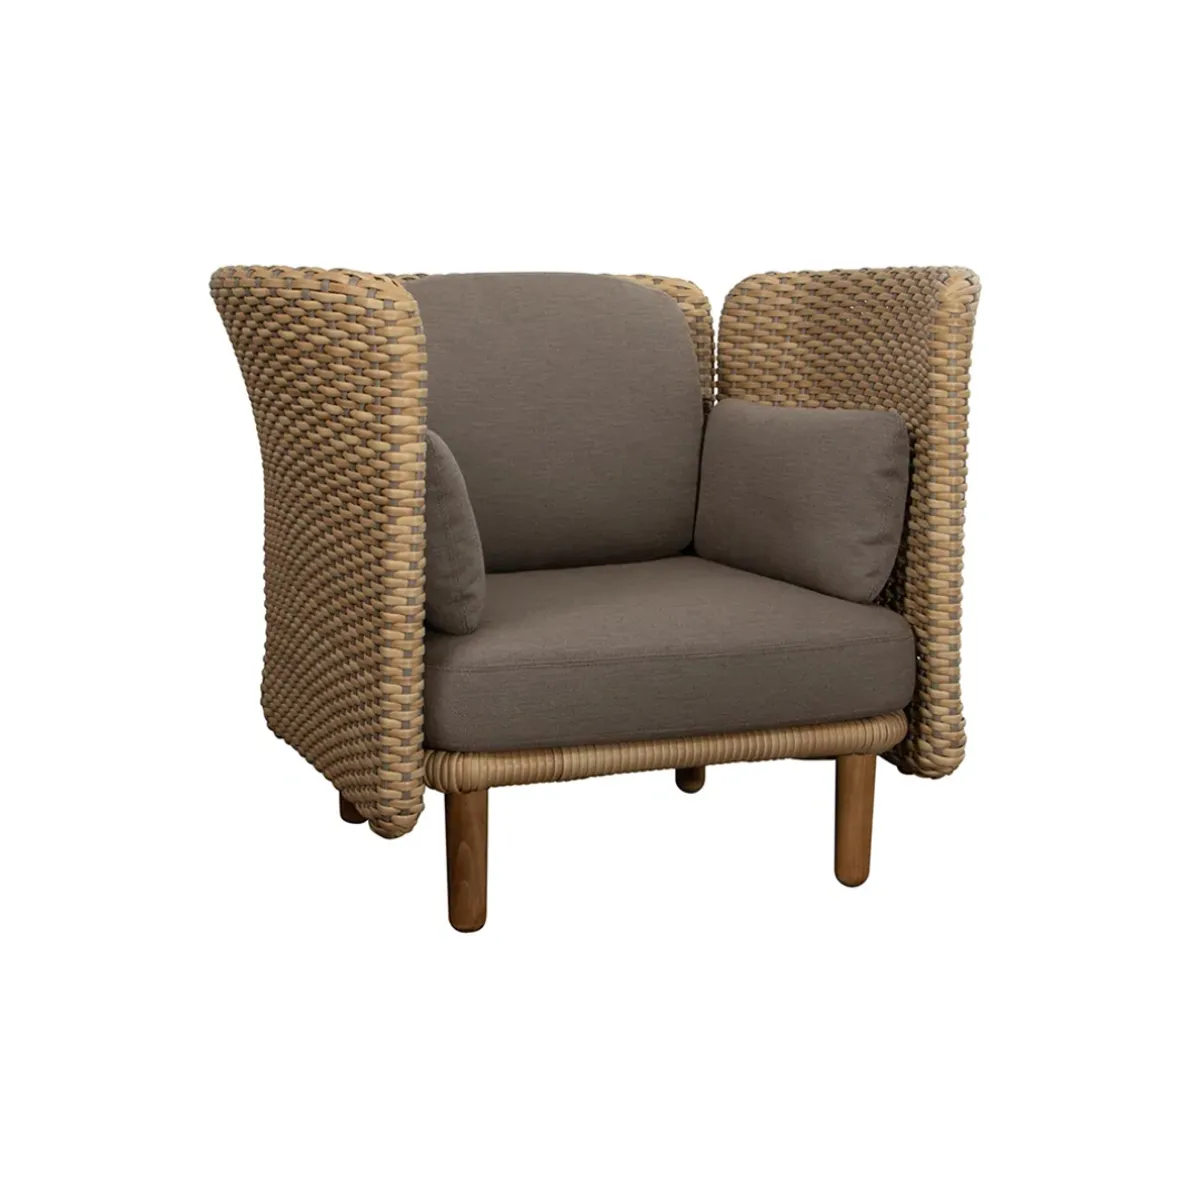 Medora lounge chair 1